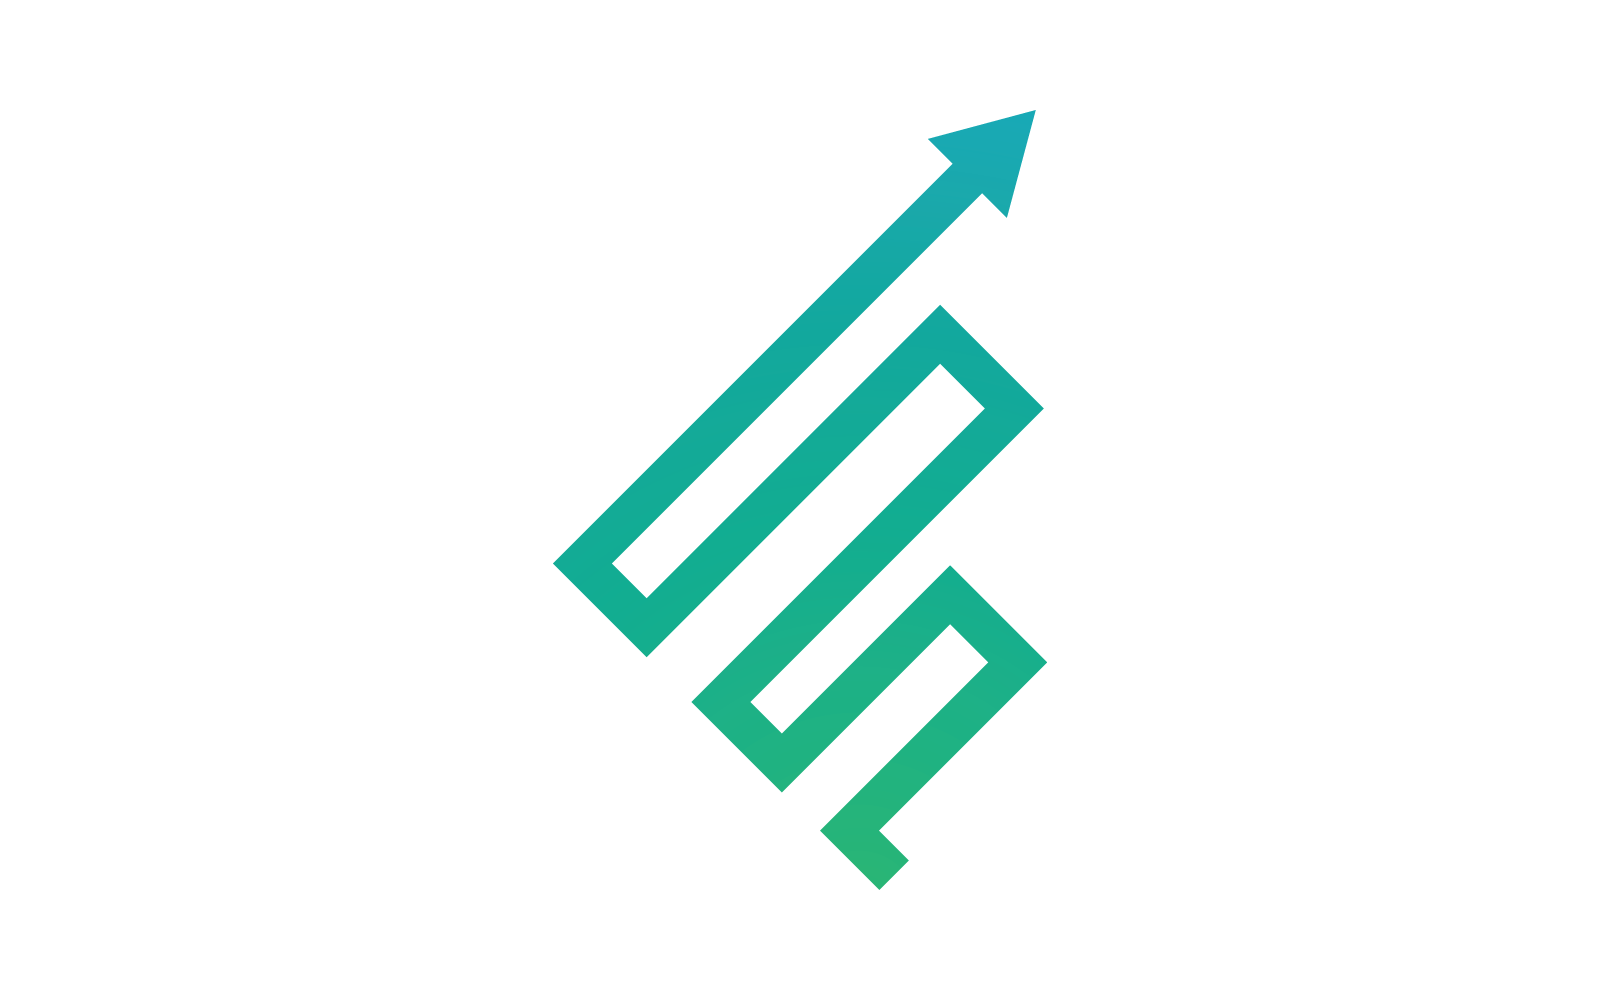 Business Finance logo icon template vector Logo Template